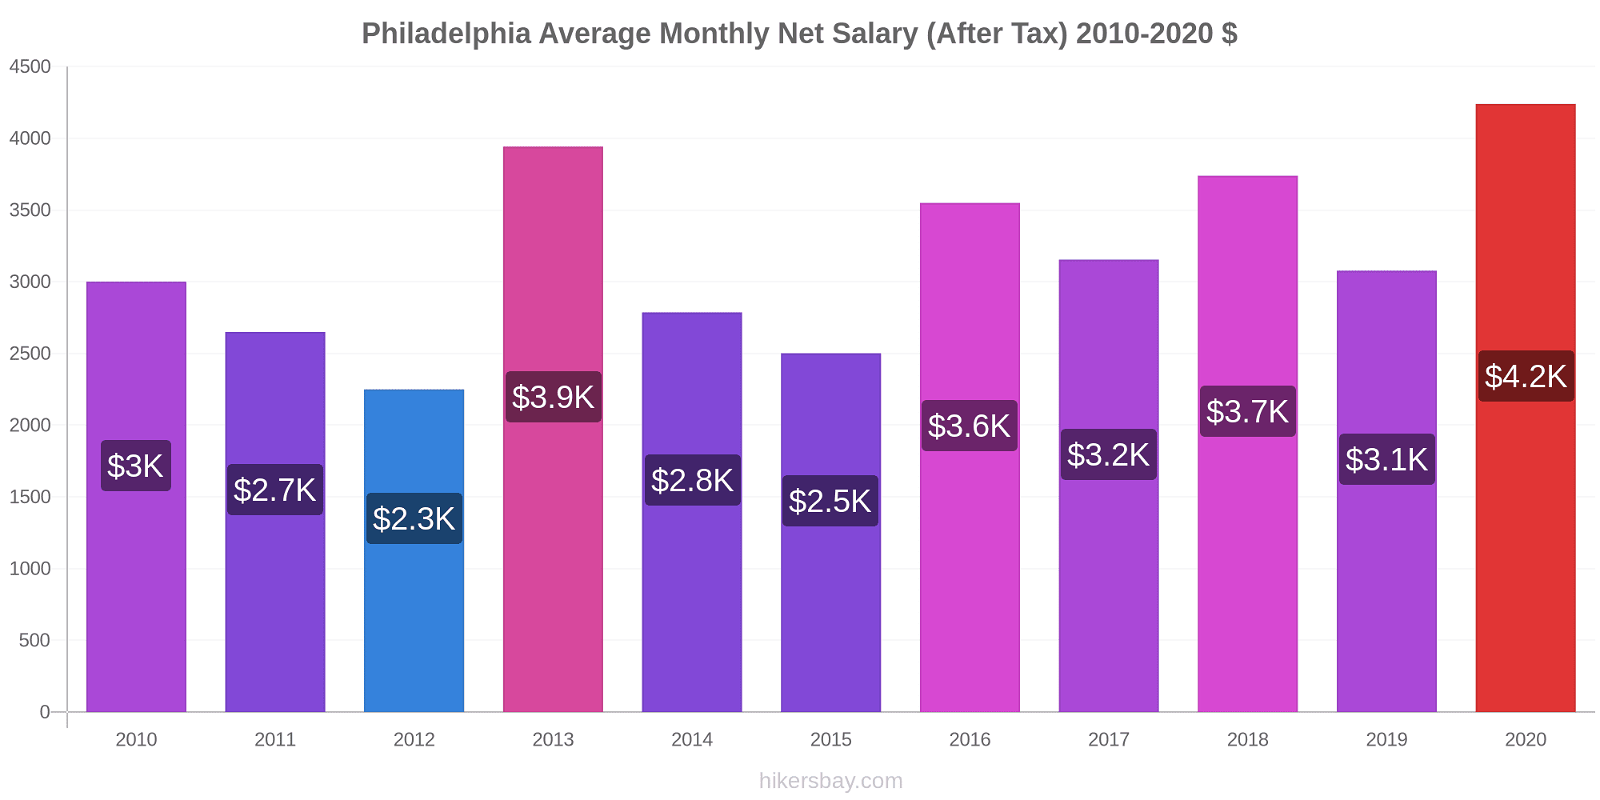 Philadelphia price changes Average Monthly Net Salary (After Tax) hikersbay.com